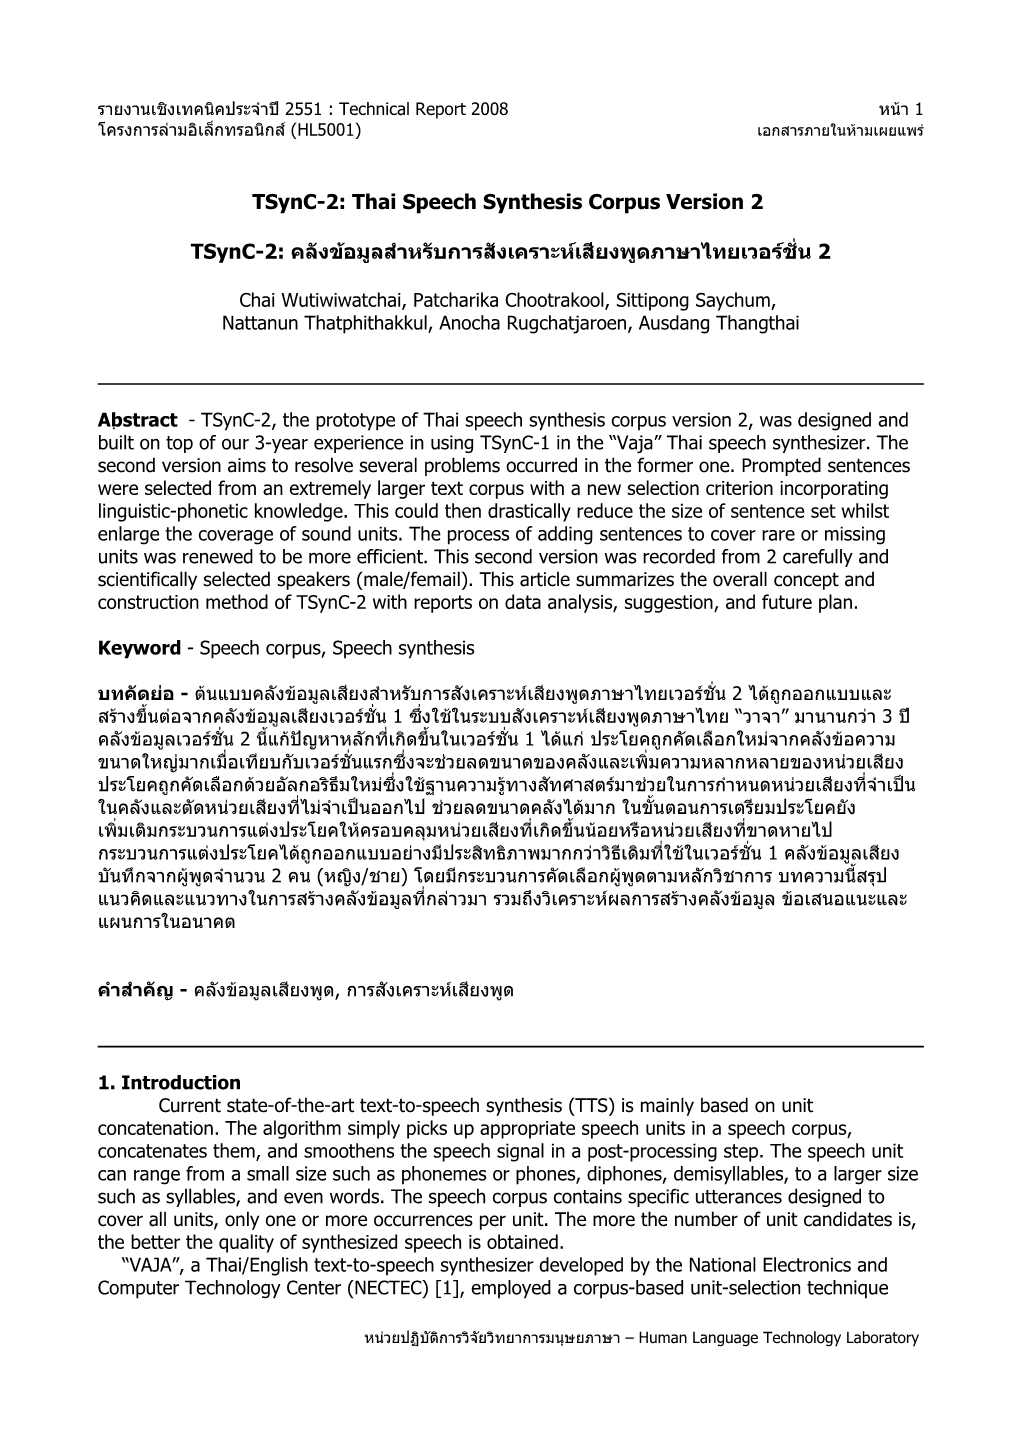 Thai Speech Synthesis Corpus Version 2 Tsync-2